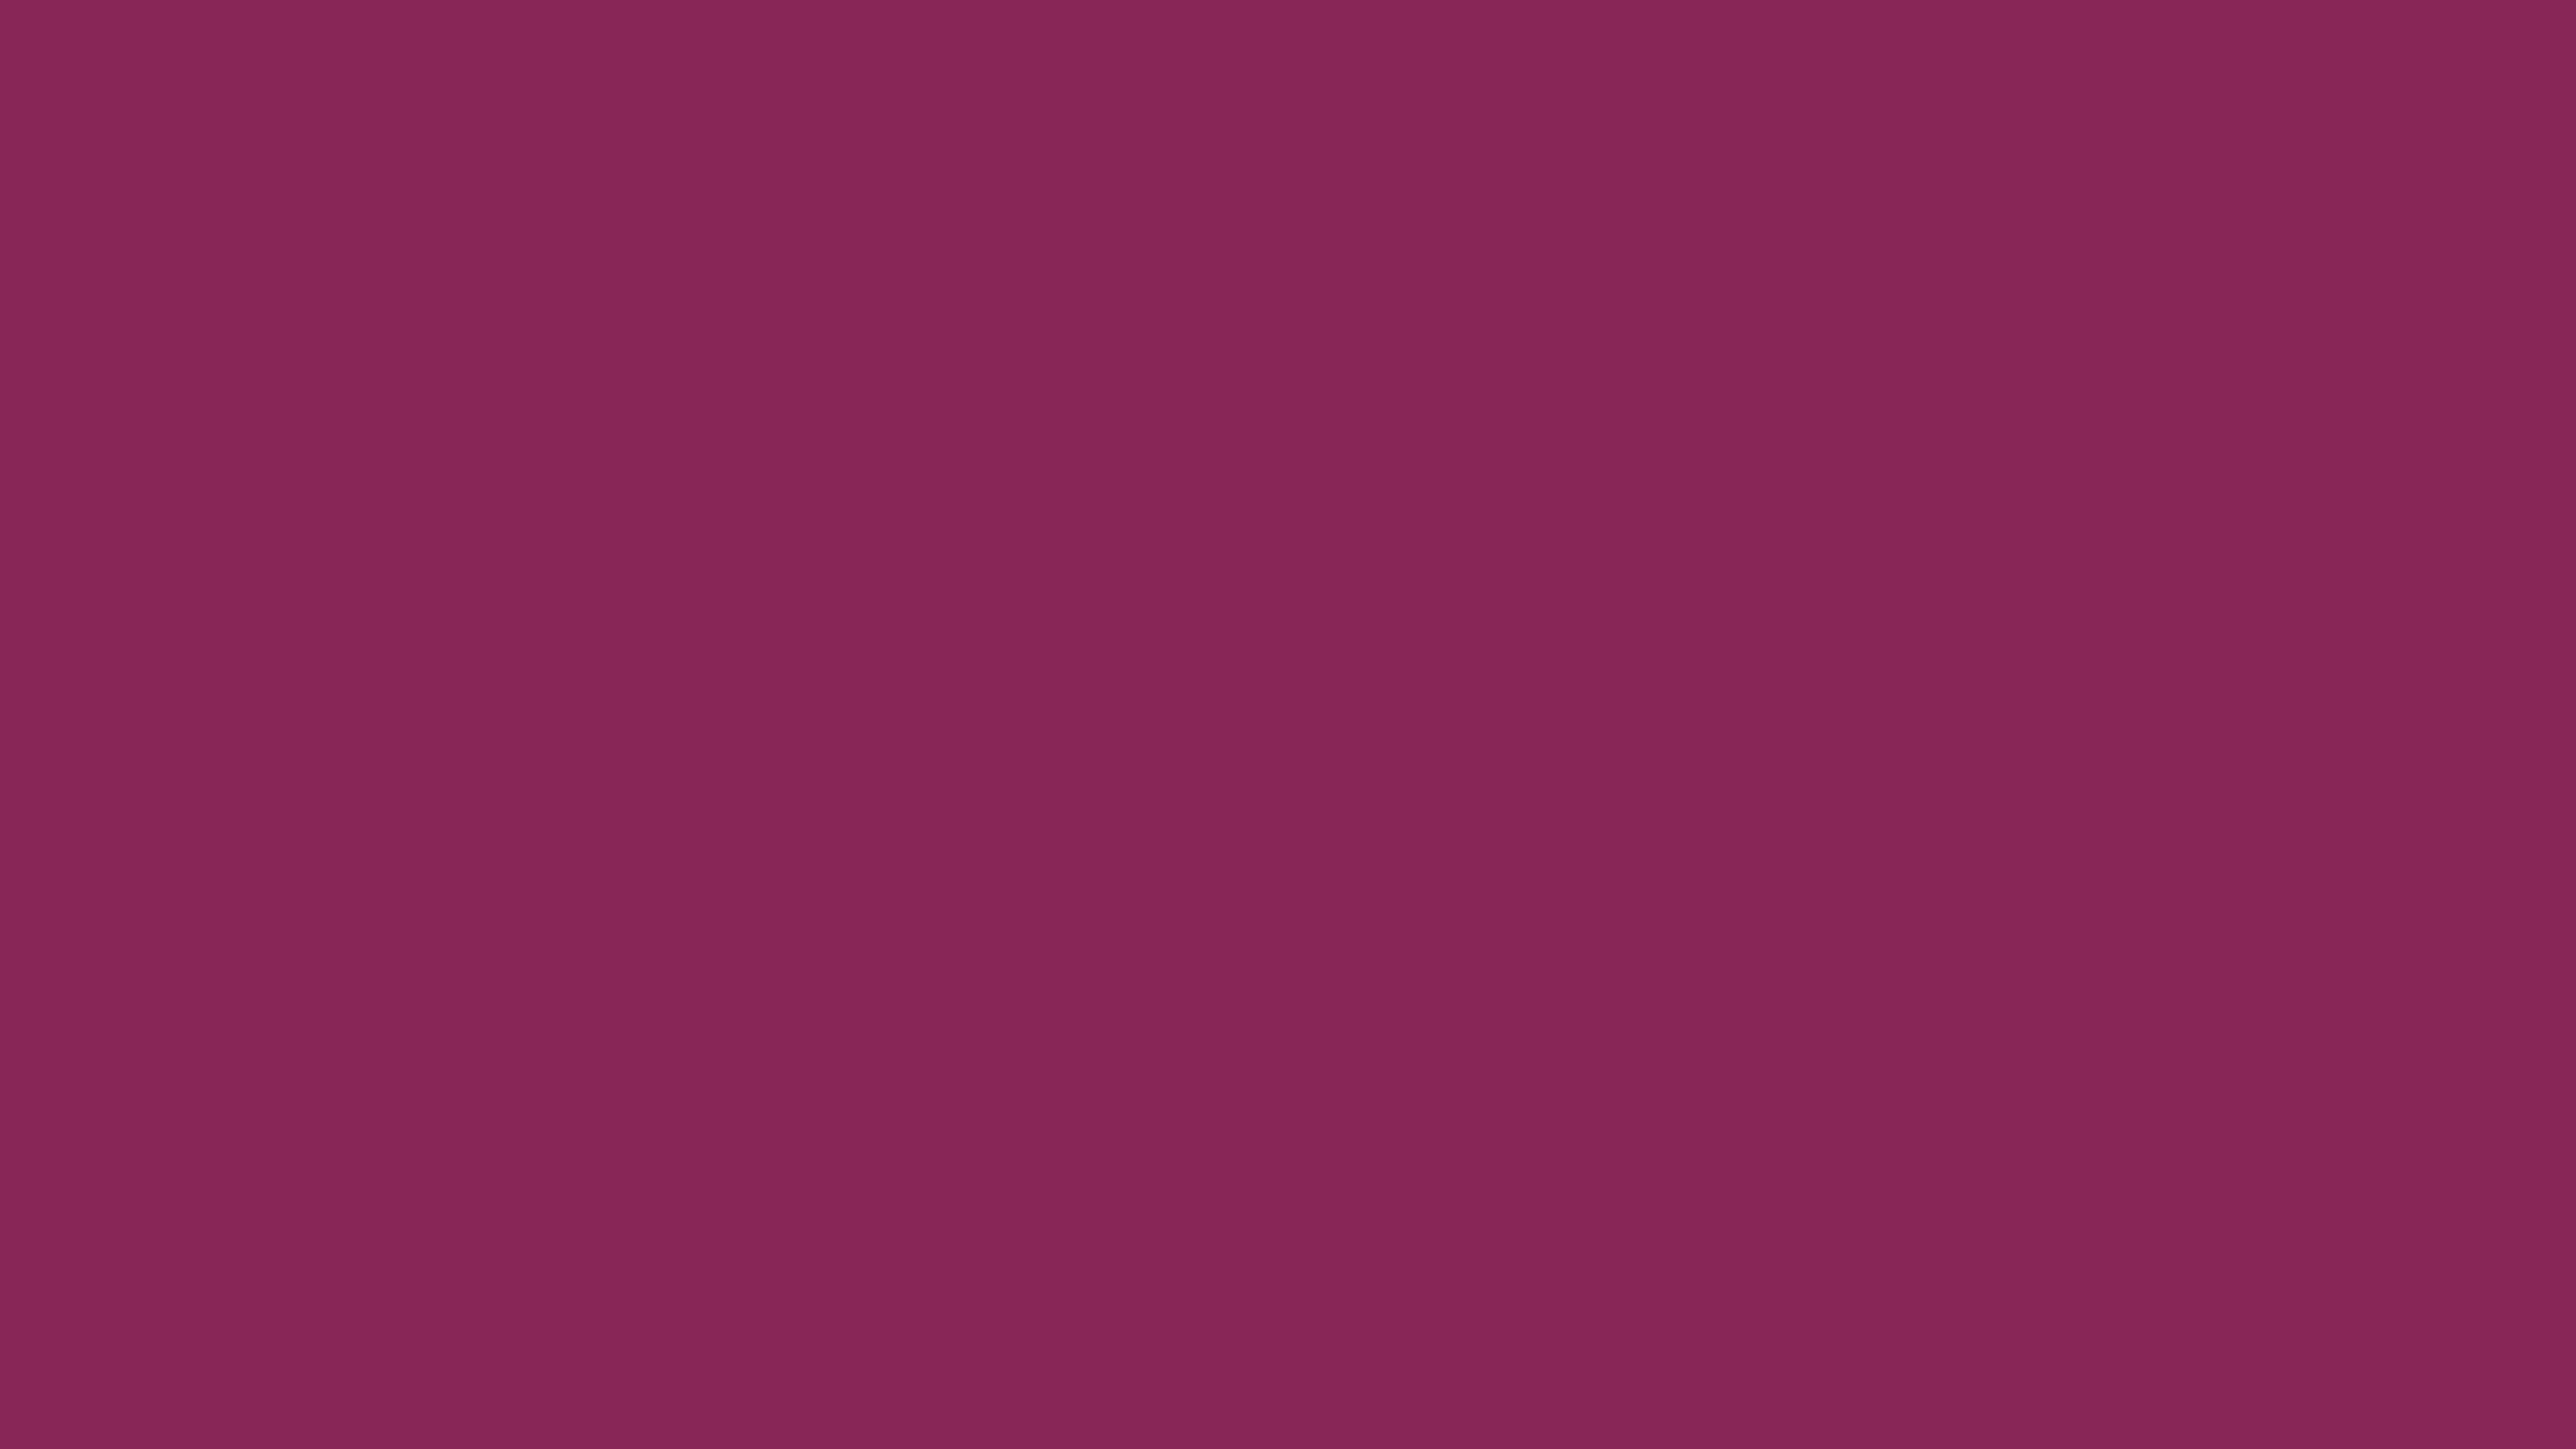 4096x2304 Dark Raspberry Solid Color Background